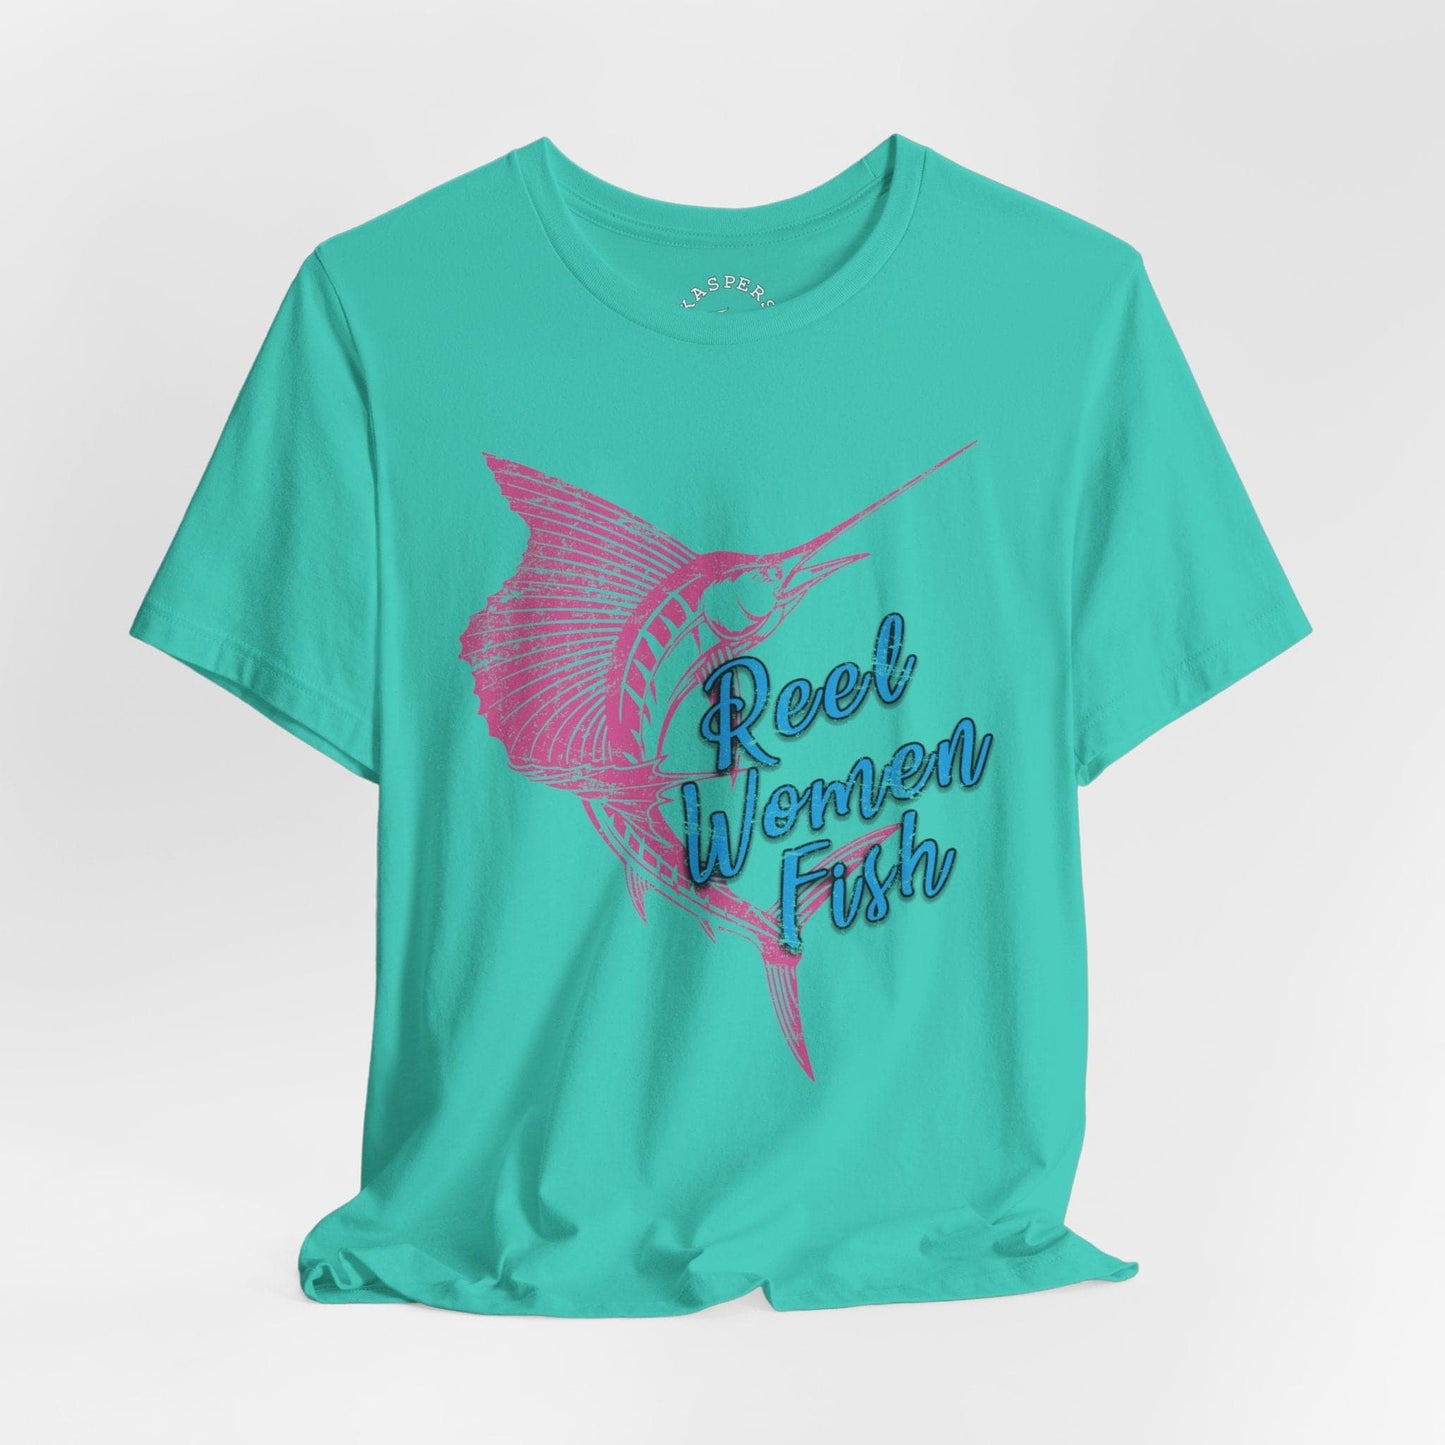 Reel Women Fish T-Shirt